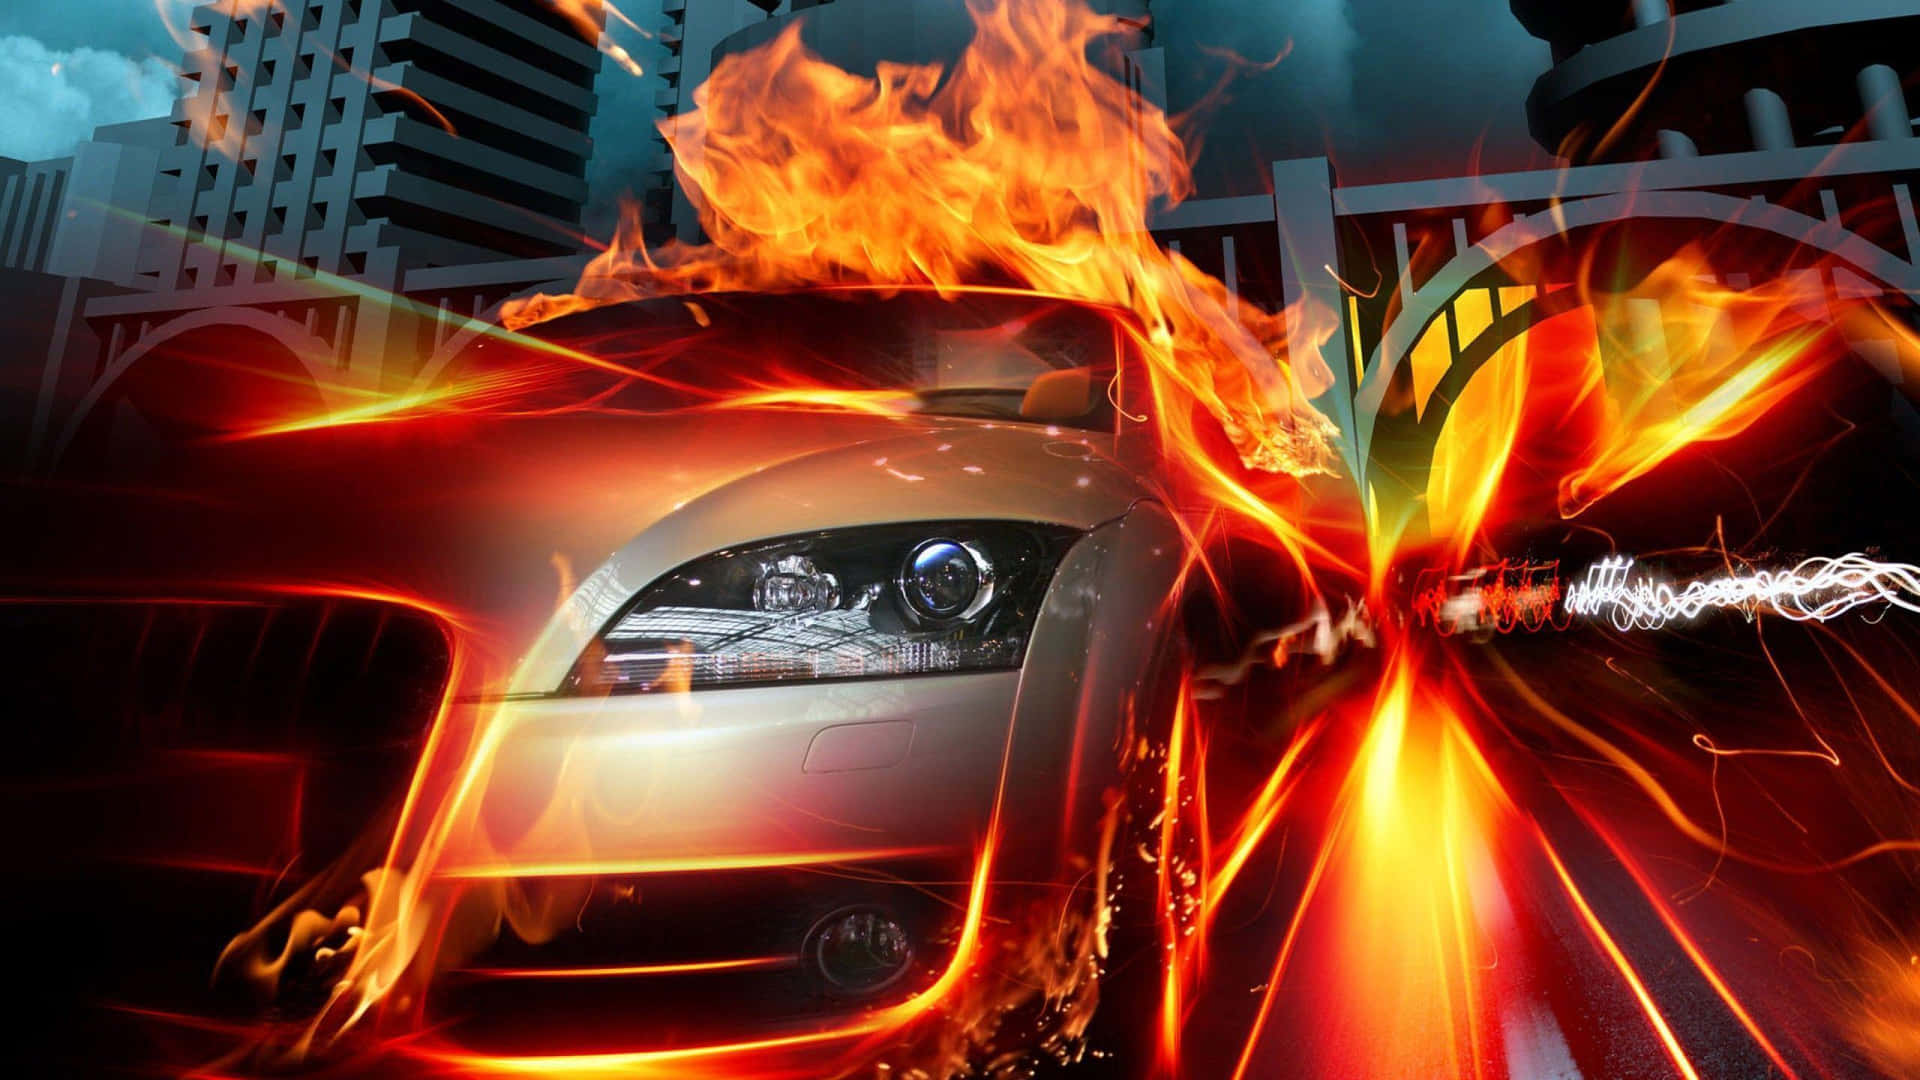 Supercooles Auto In Flammen Wallpaper